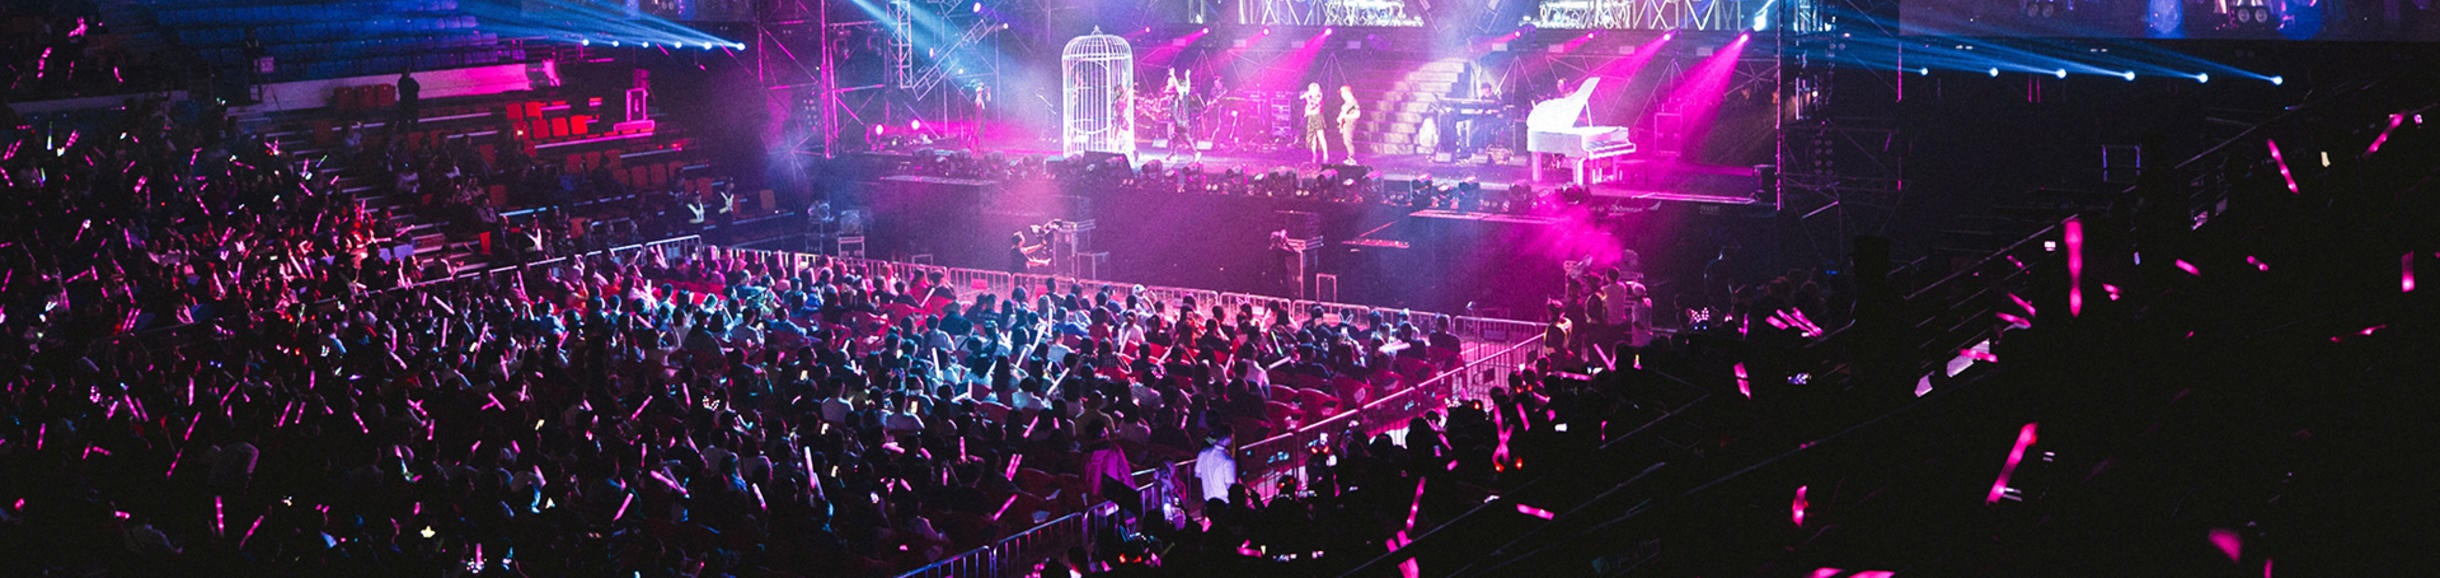 people inside a concert venue (c) pexels